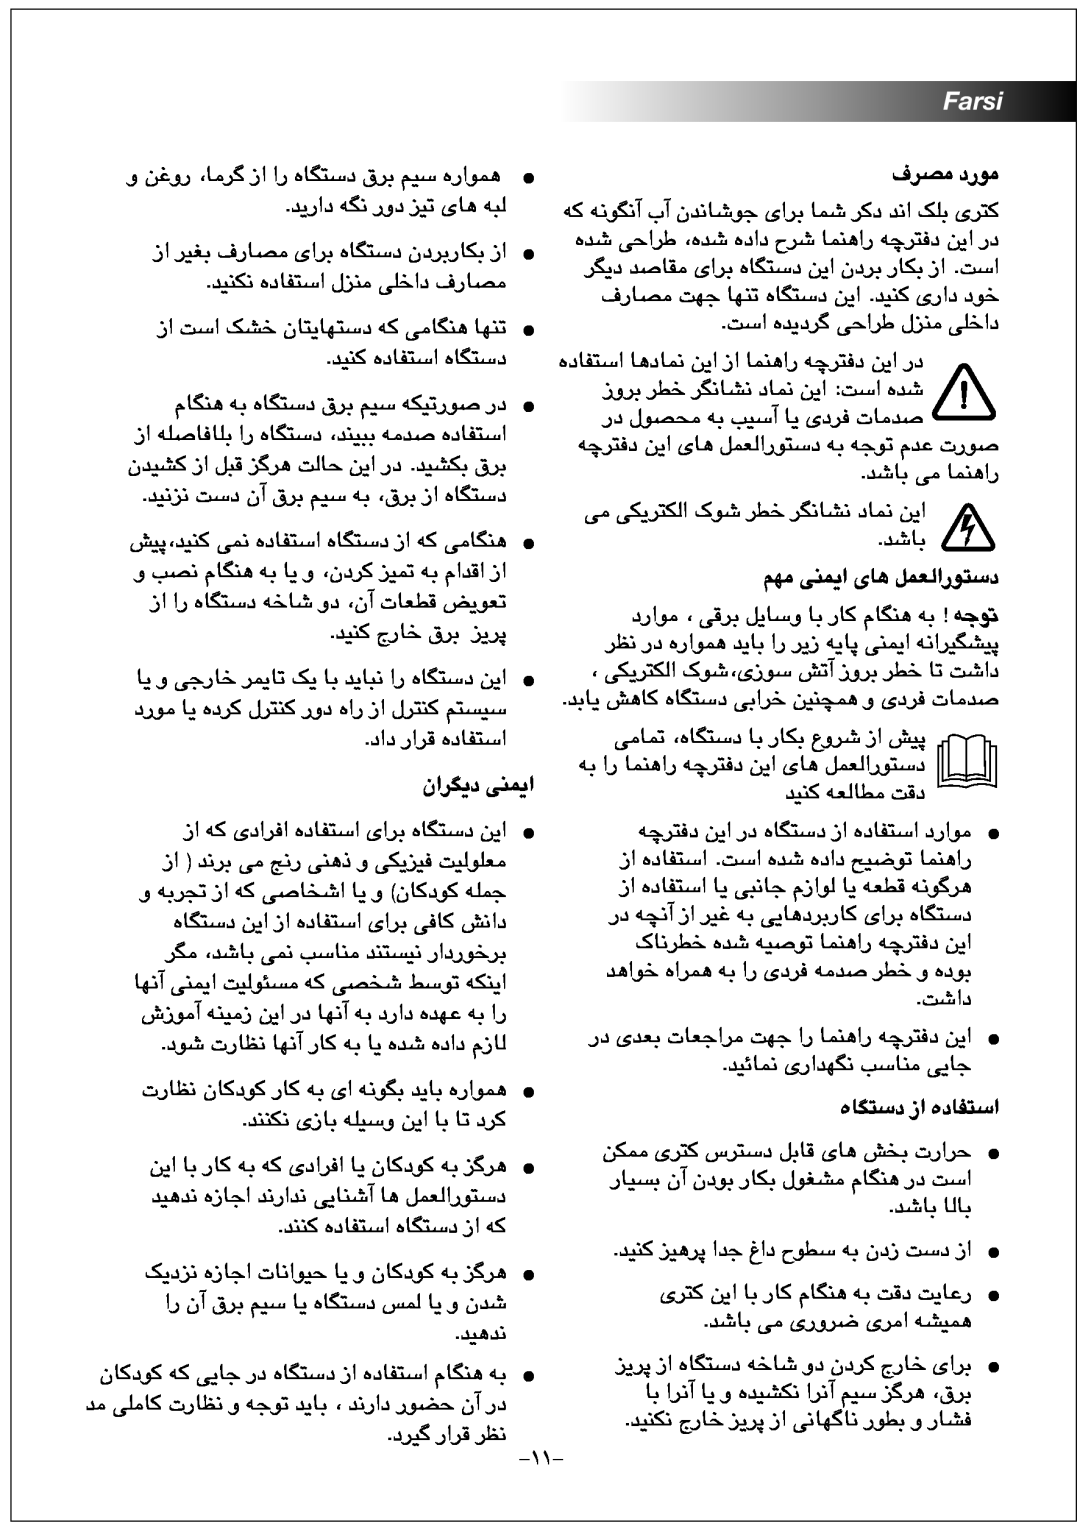 Black & Decker JC100 manual Farsi, ﻑﺮﺼﻣ ﺩﺭﻮﻣ, ﻢﻬﻣ ﯽﻨﻤﯾﺍ ﯼﺎﻫ ﻞﻤﻌﻟﺍﺭﻮﺘﺳﺩ, ﻥﺍﺮﮕﯾﺩ ﯽﻨﻤﯾﺍ, ﻩﺎﮕﺘﺳﺩ ﺯﺍ ﻩﺩﺎﻔﺘﺳﺍ 